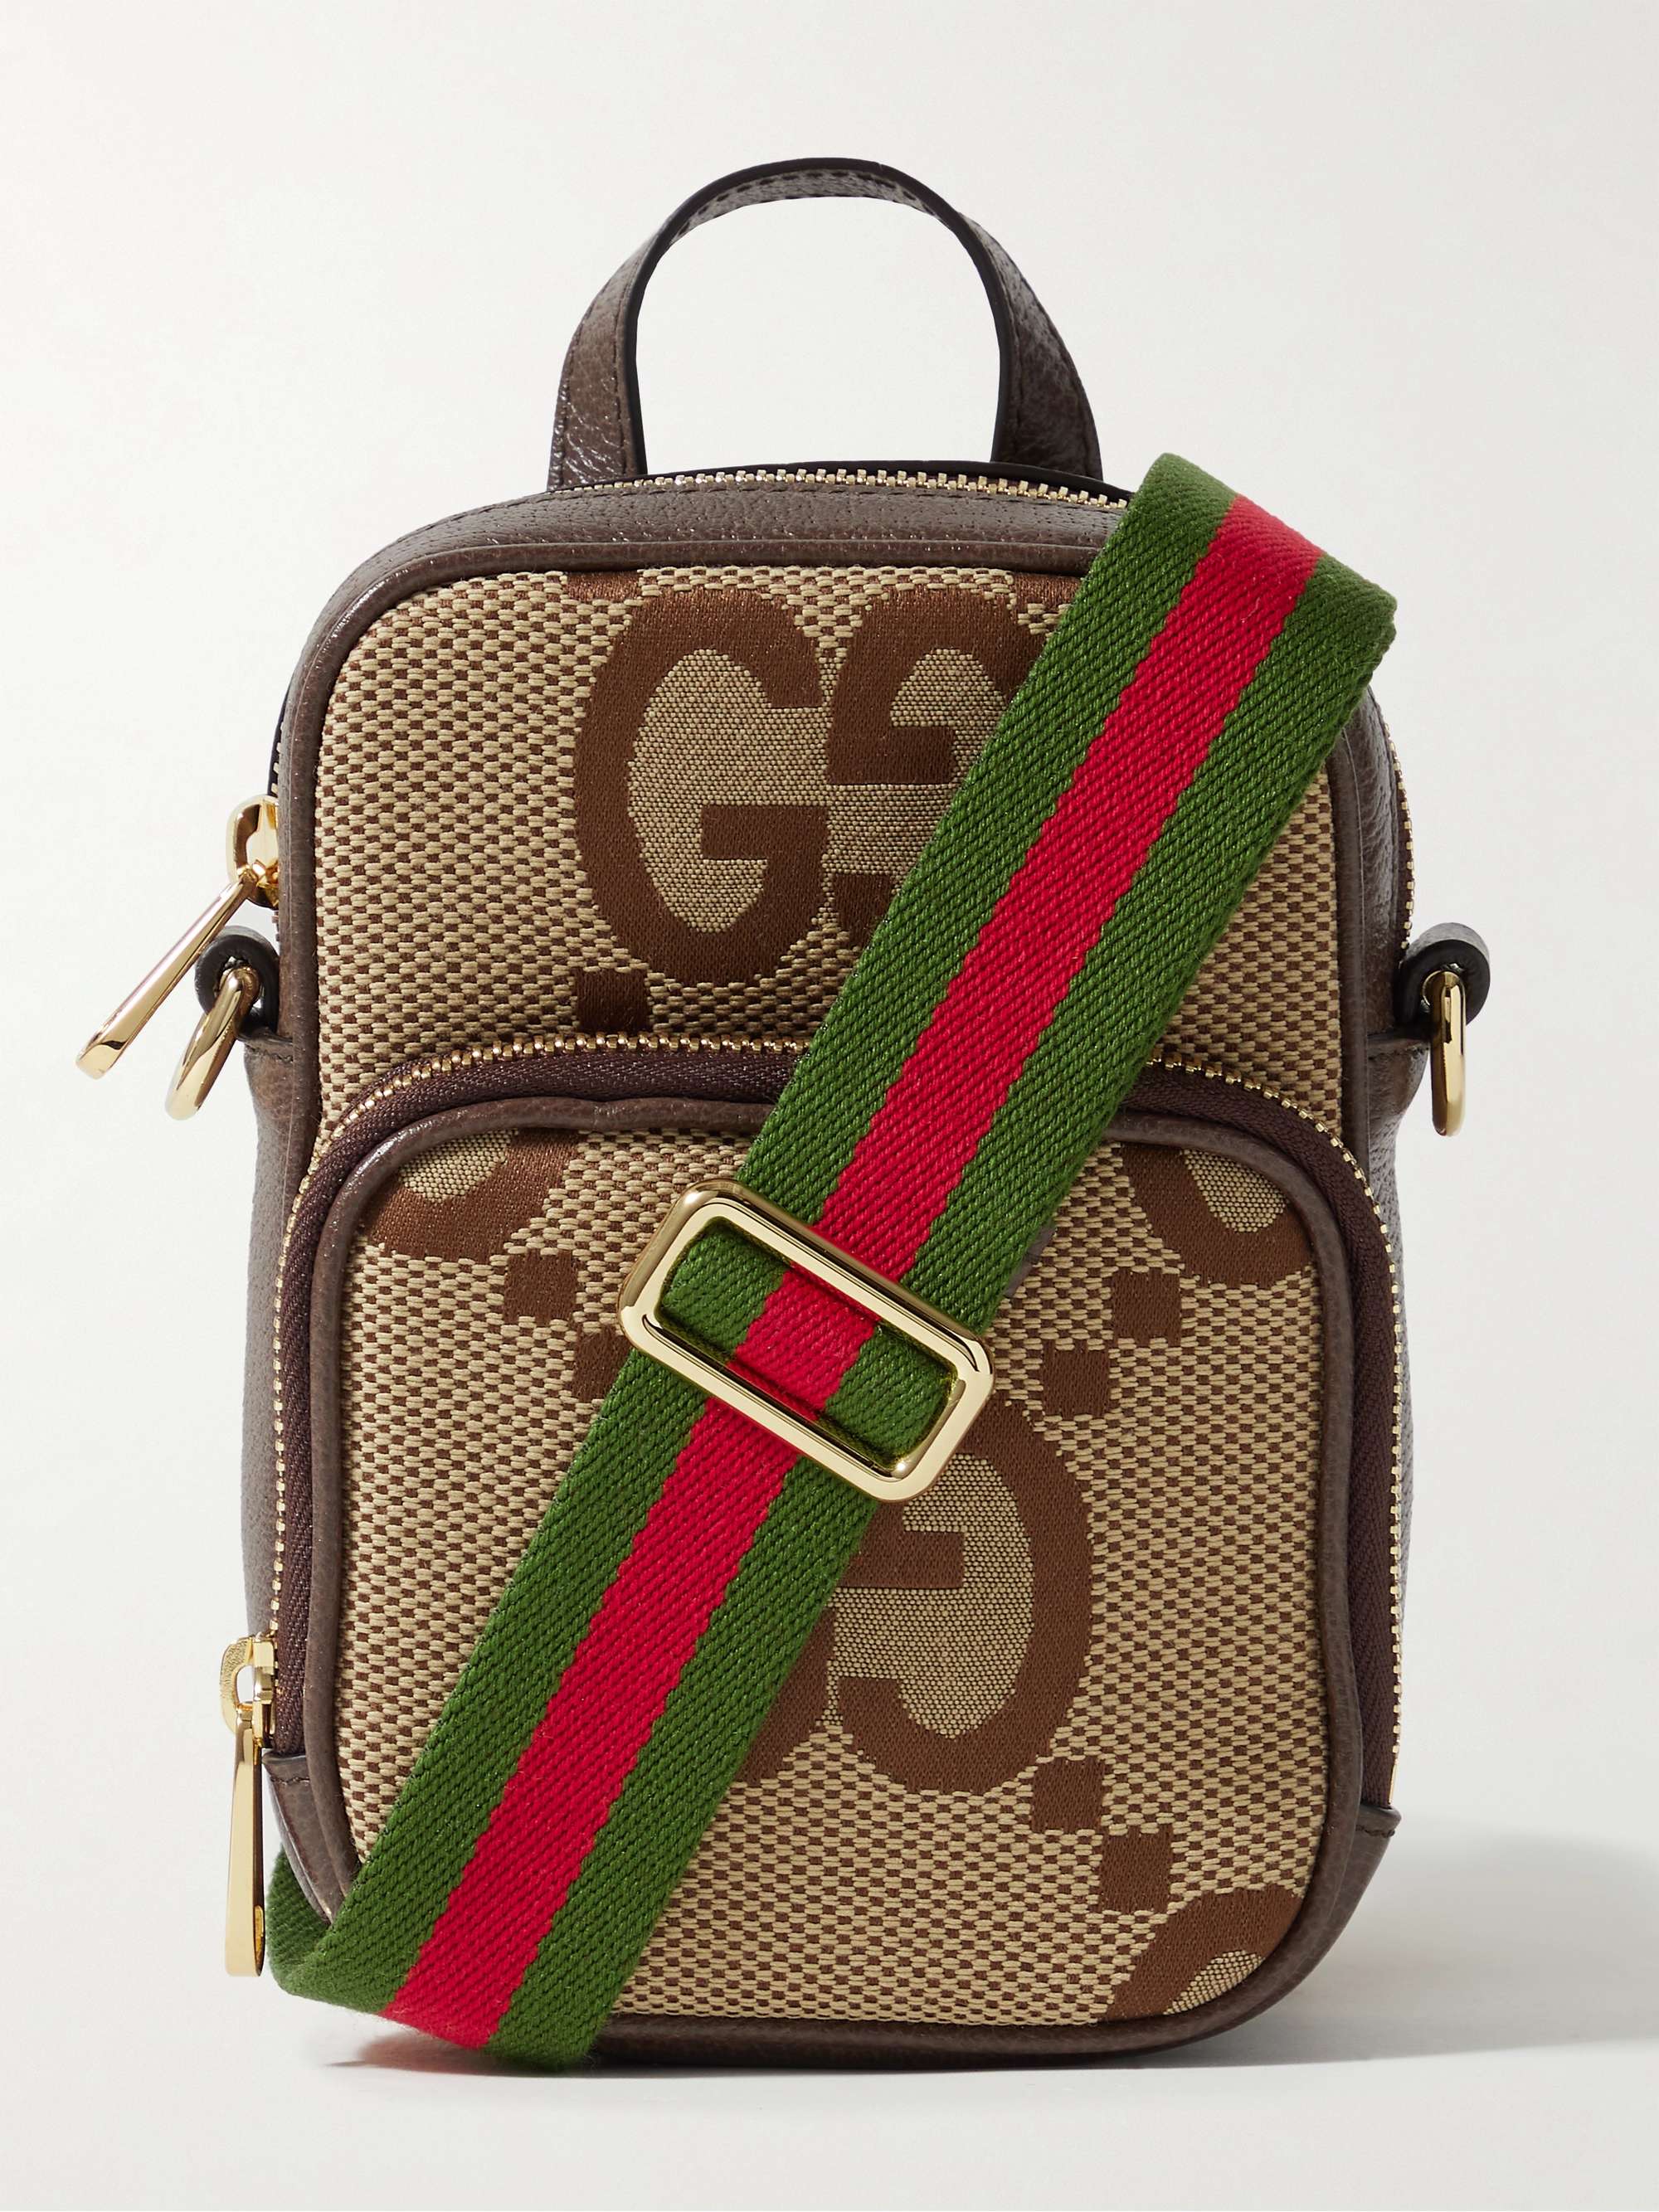 GUCCI Full-Grain Leather-Trimmed Monogrammed Canvas Messenger Bag